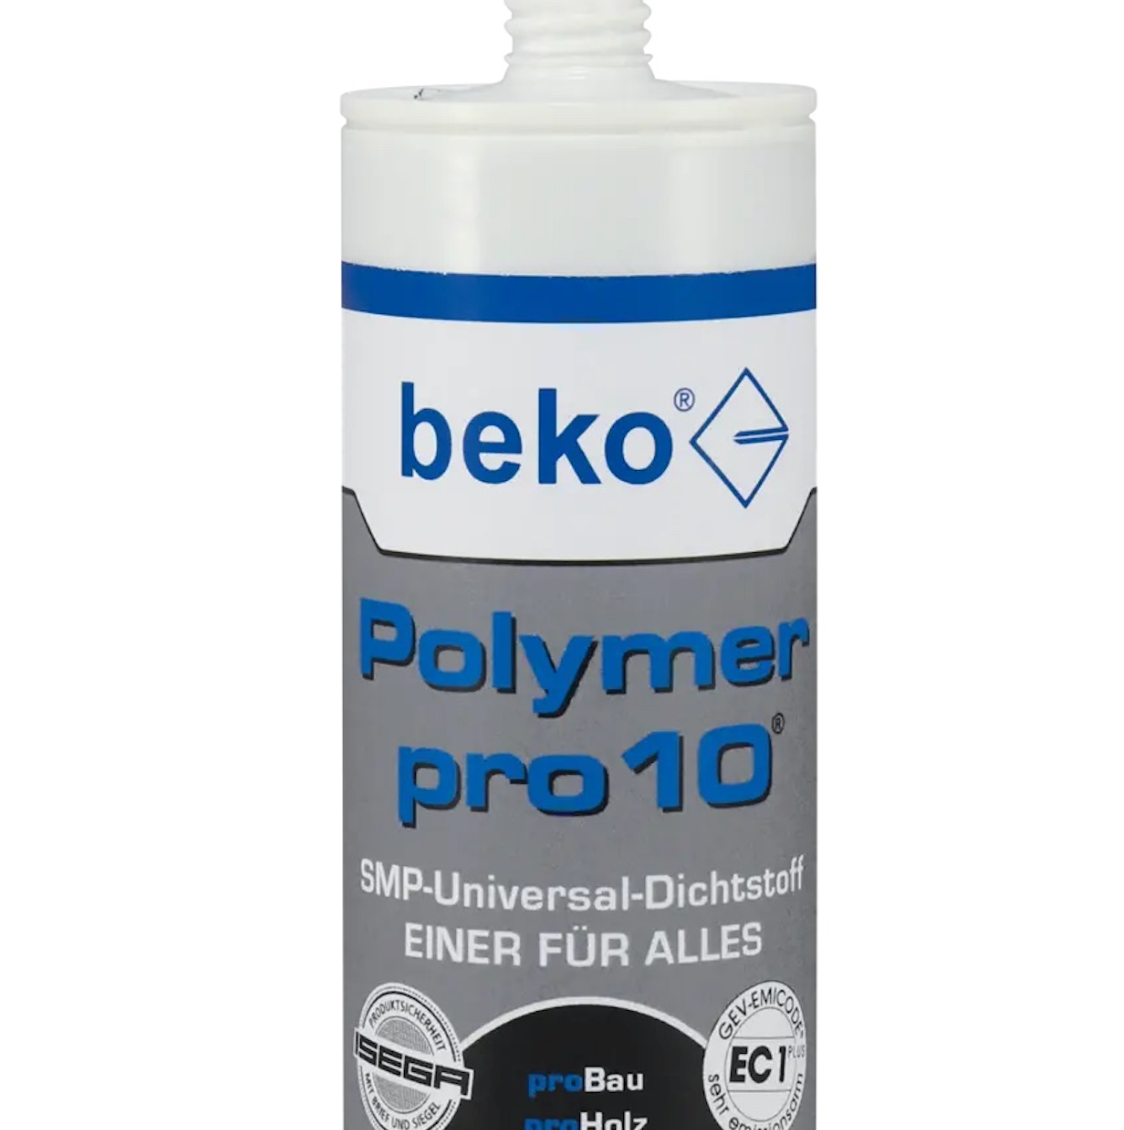 beko® Polymer pro10® (SMP-Universal-Dichtstoff)